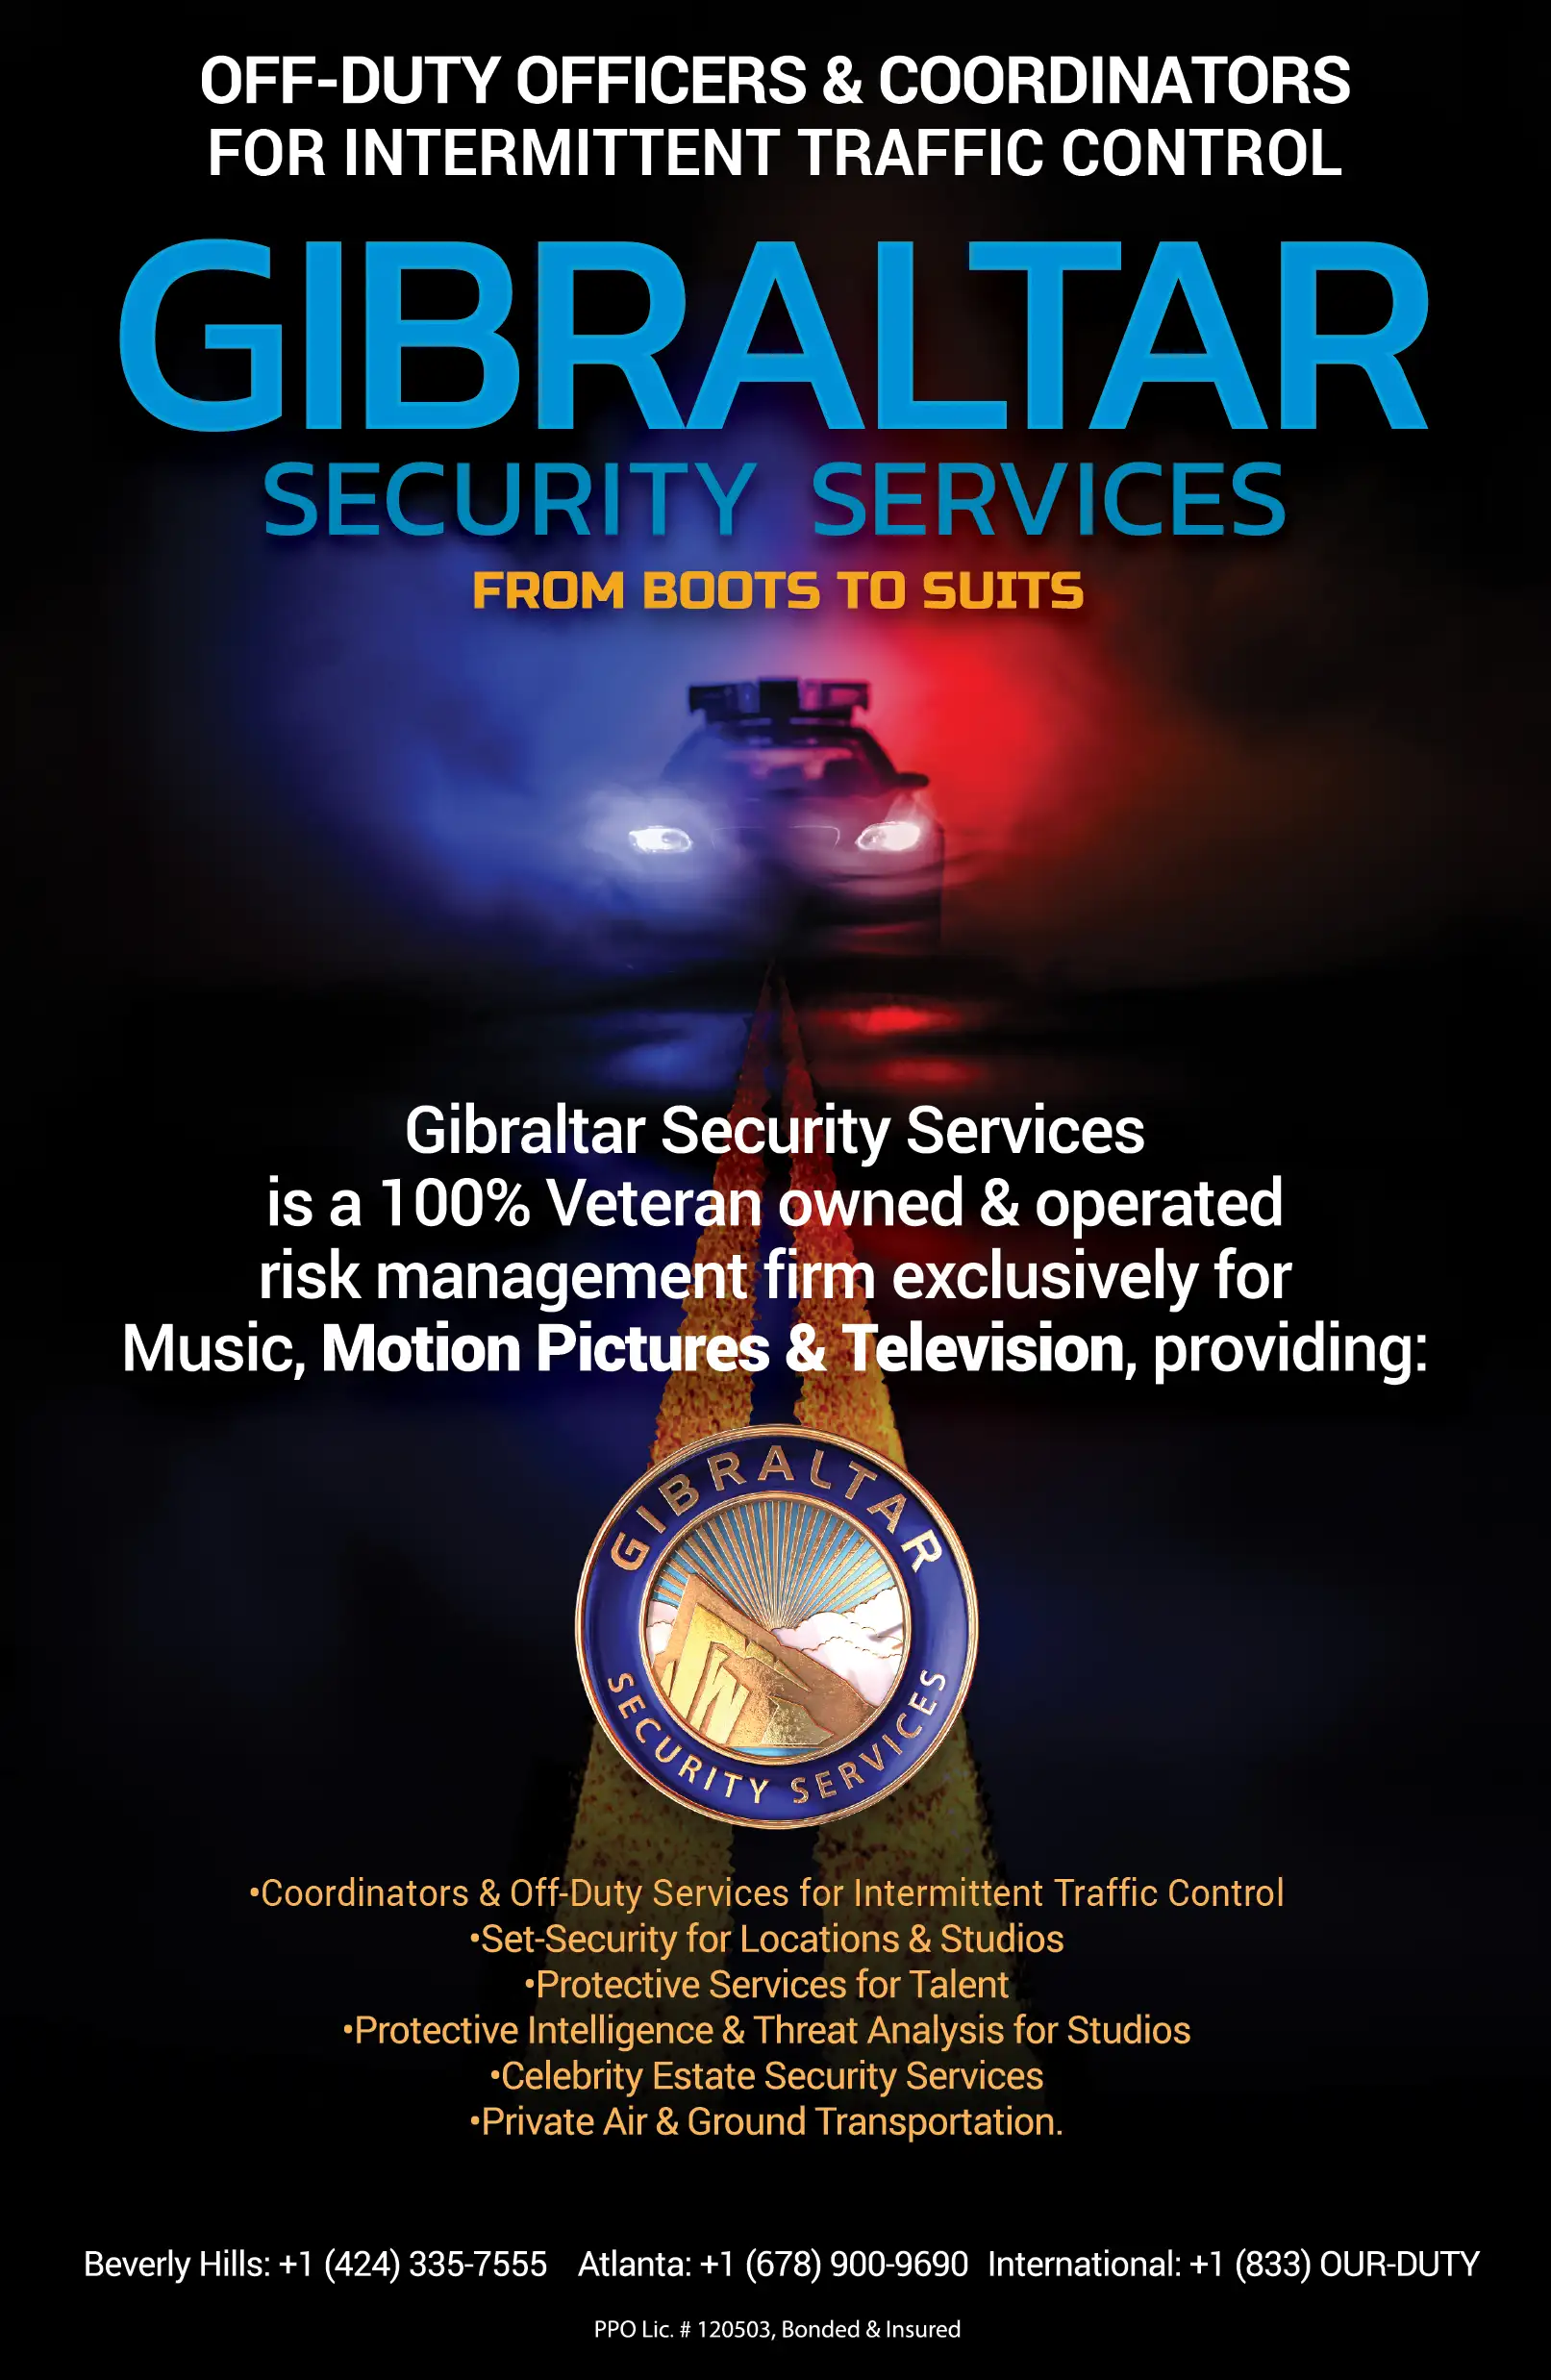 GIBRALTAR SECURITY SERVICE